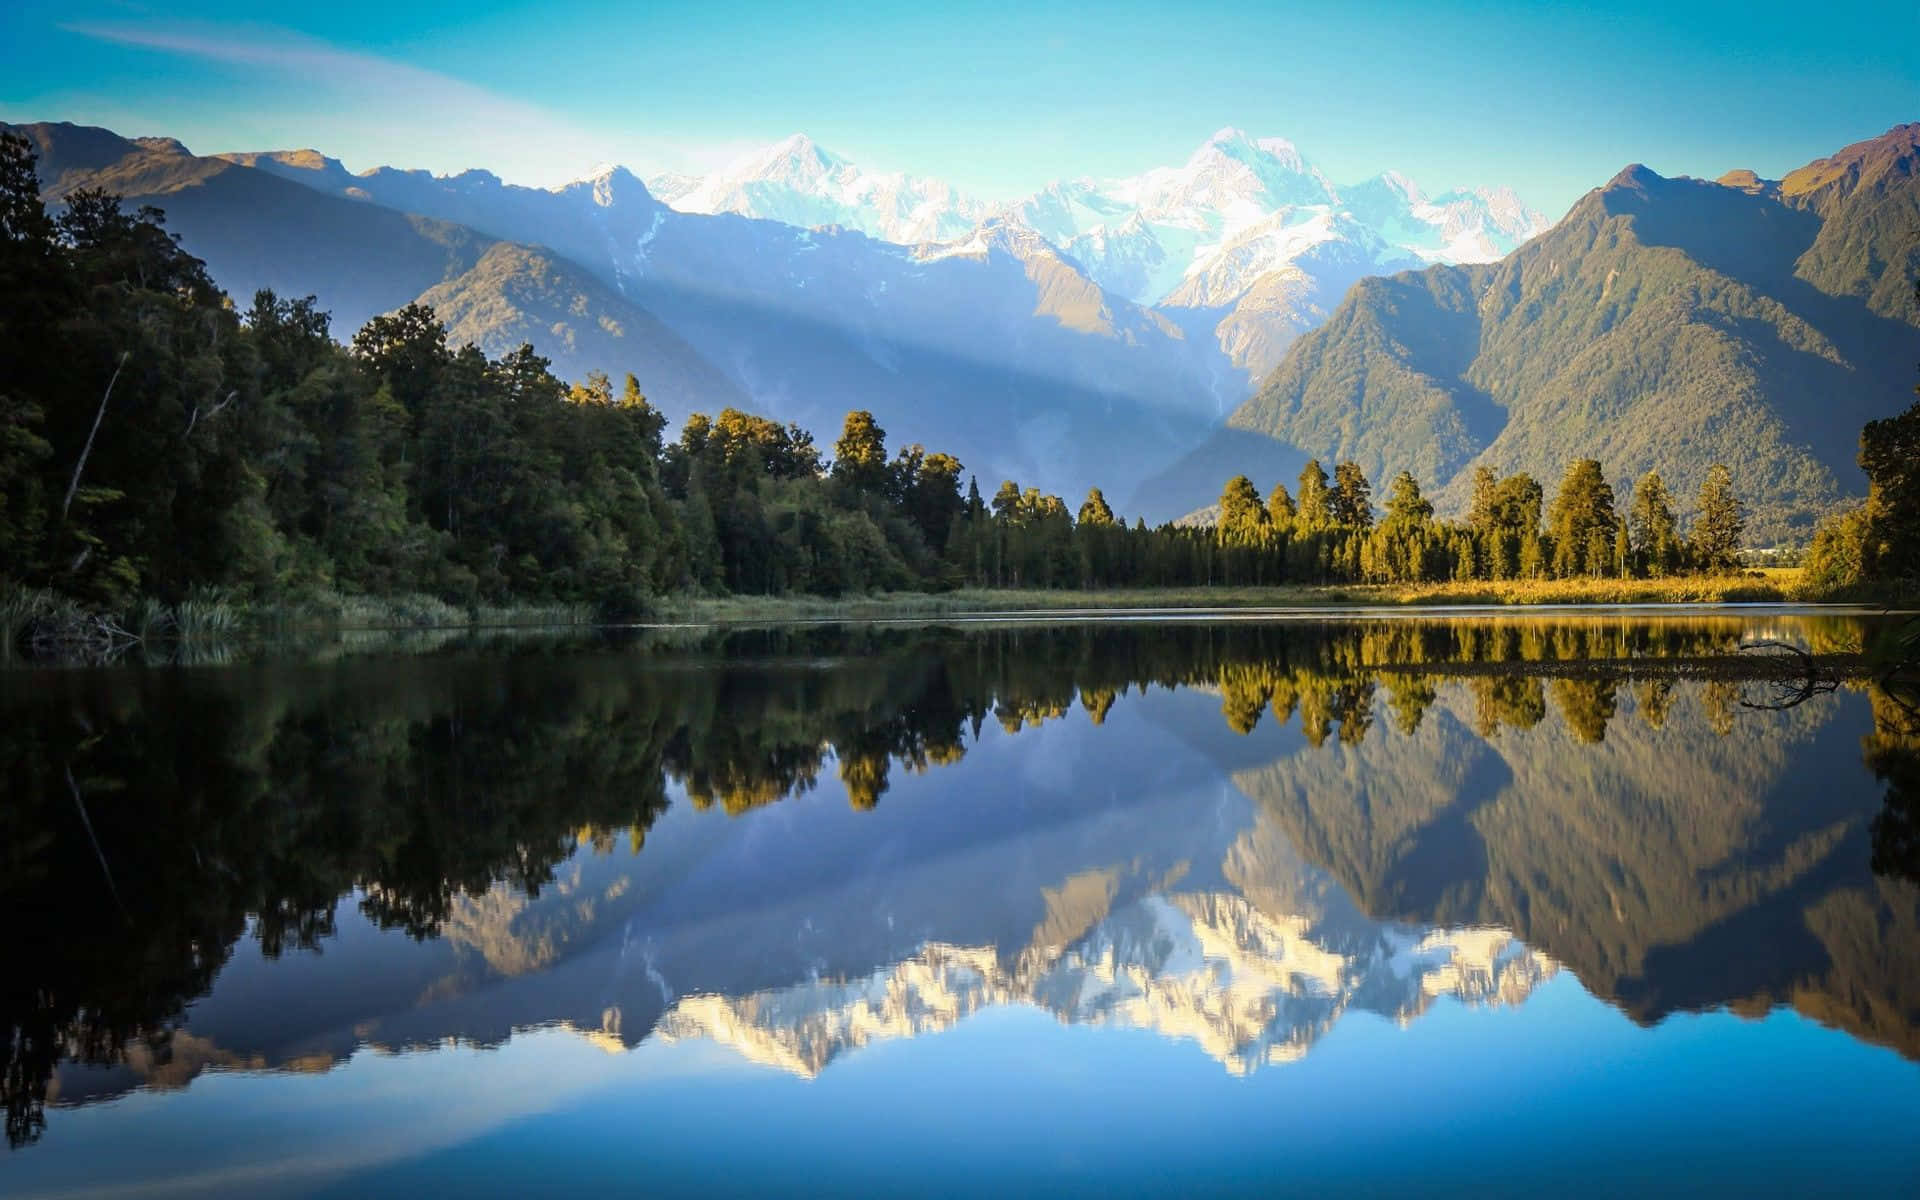 Majestic mountains of New Zealand